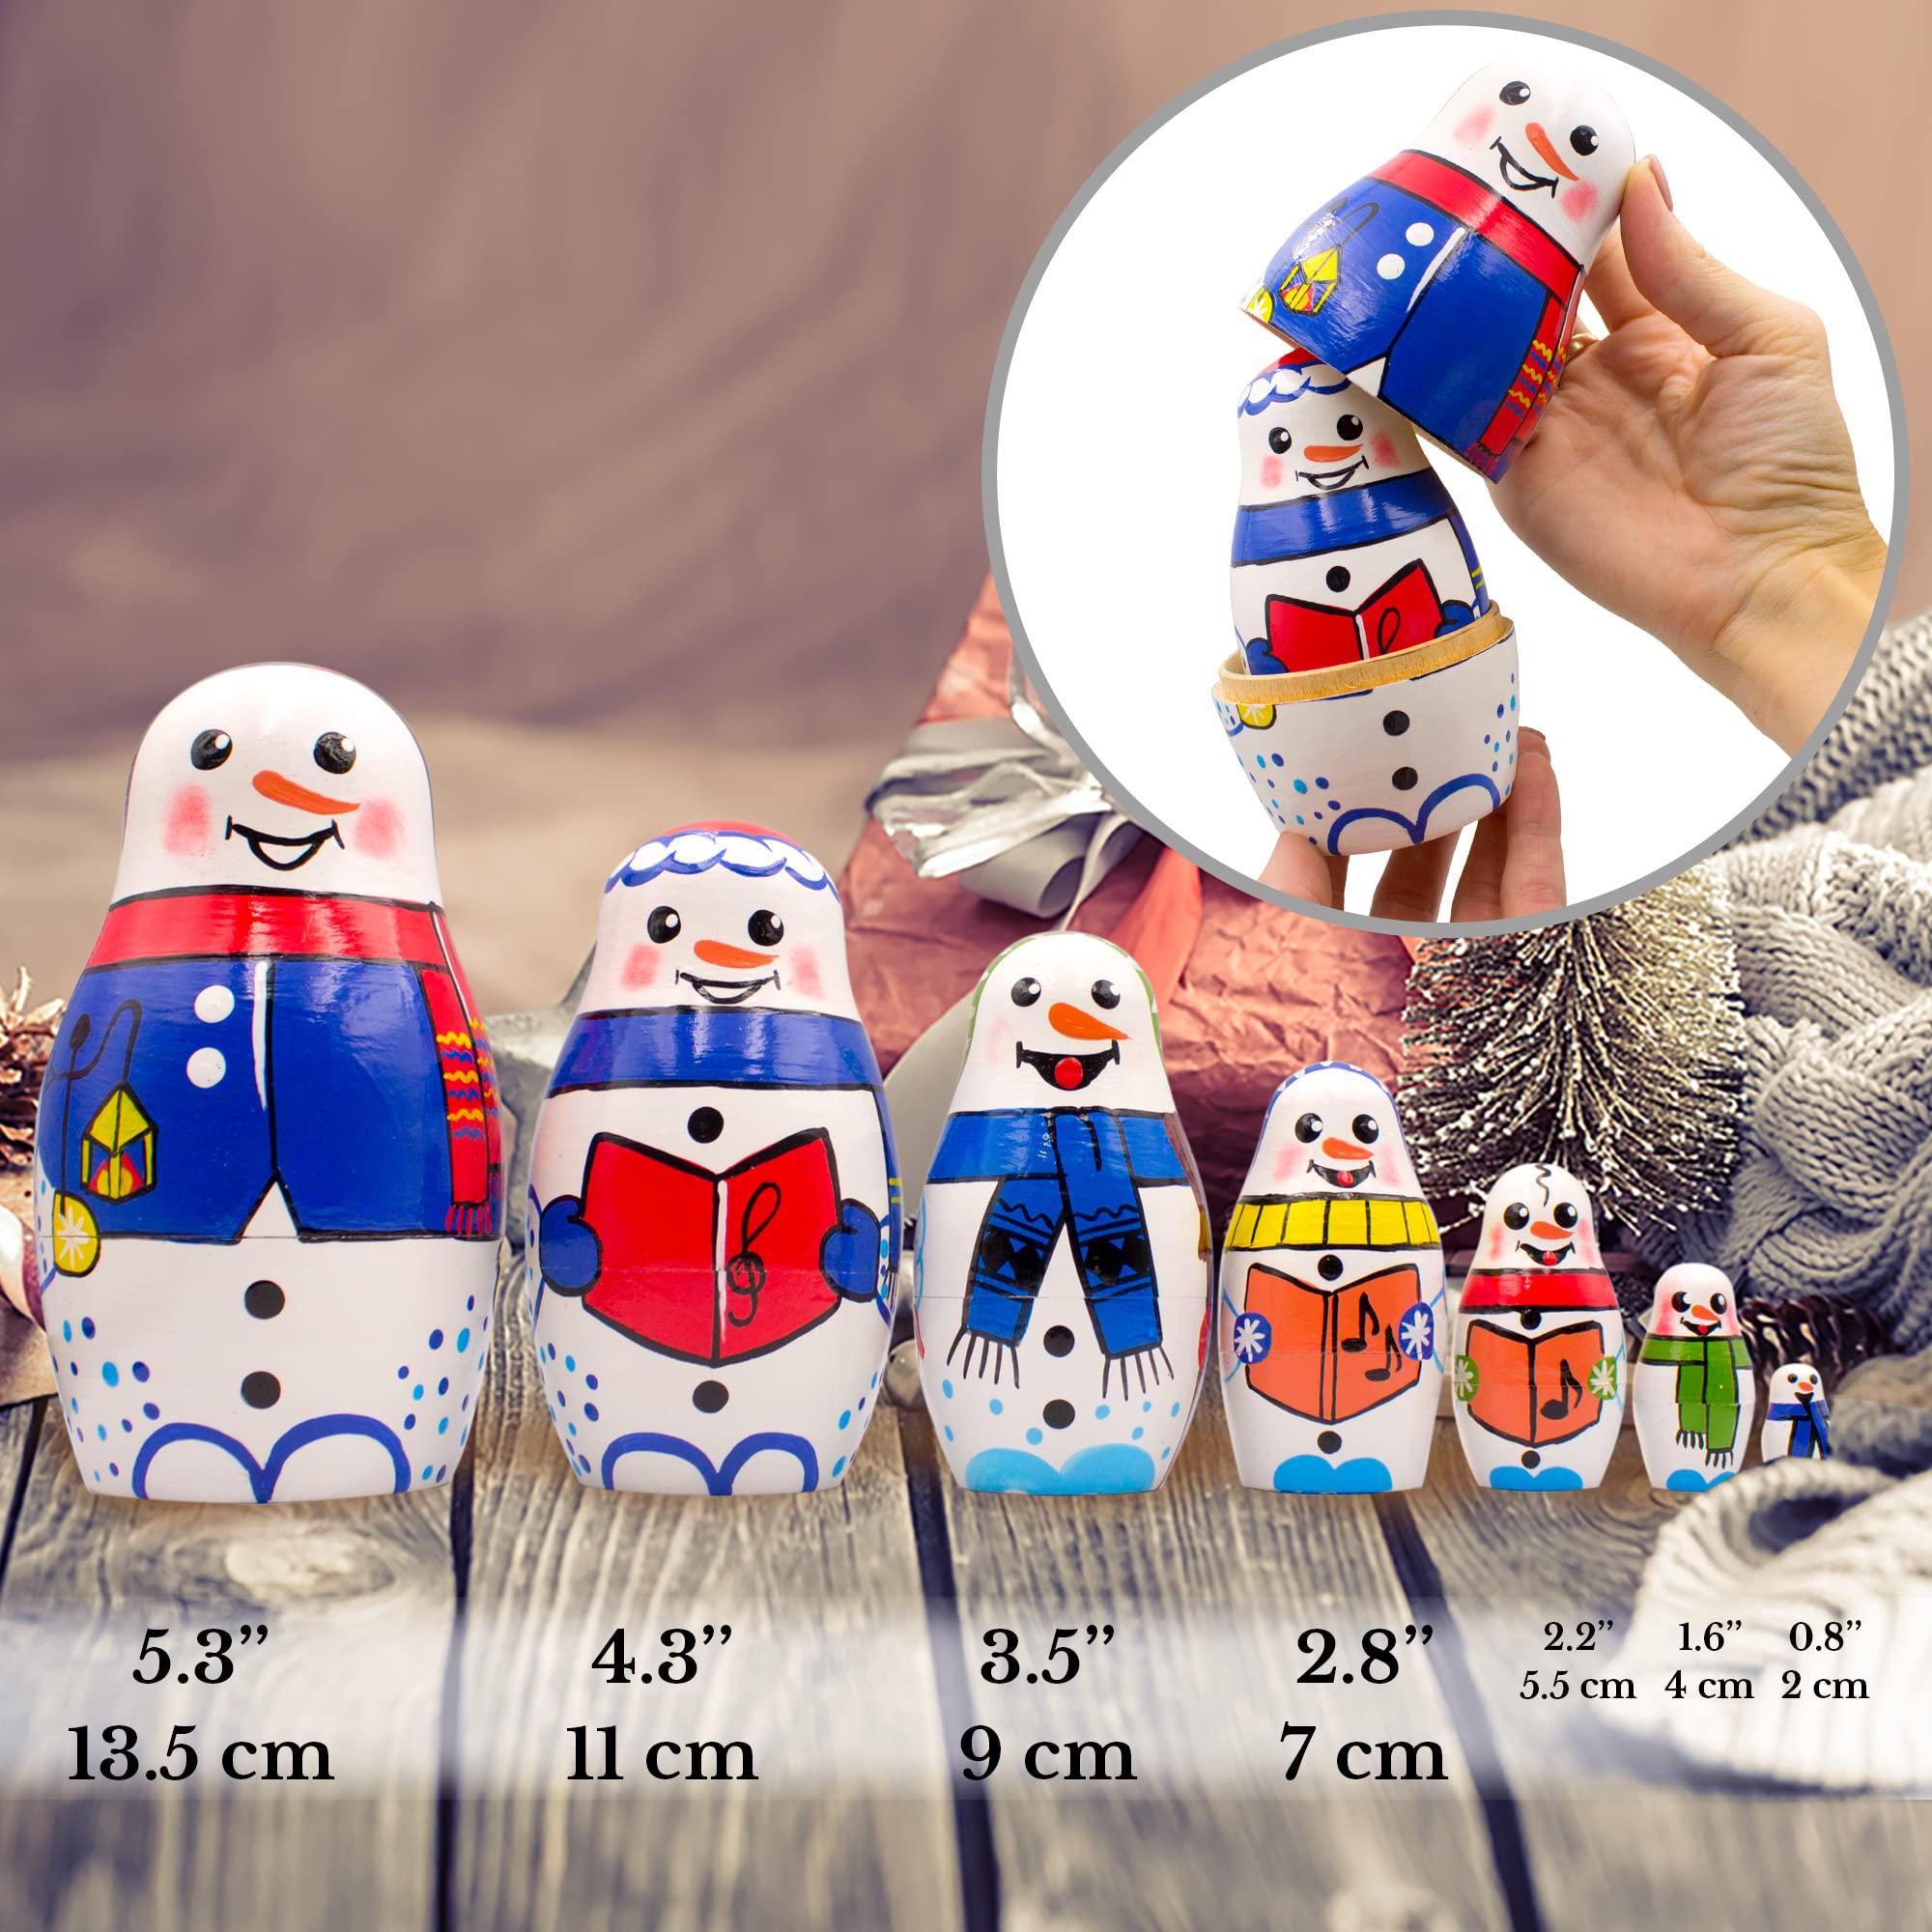 aevvv snowman nesting dolls set of 7 pcs - matryoshka with snowman figures - snowman decorations - christmas decorations - sn